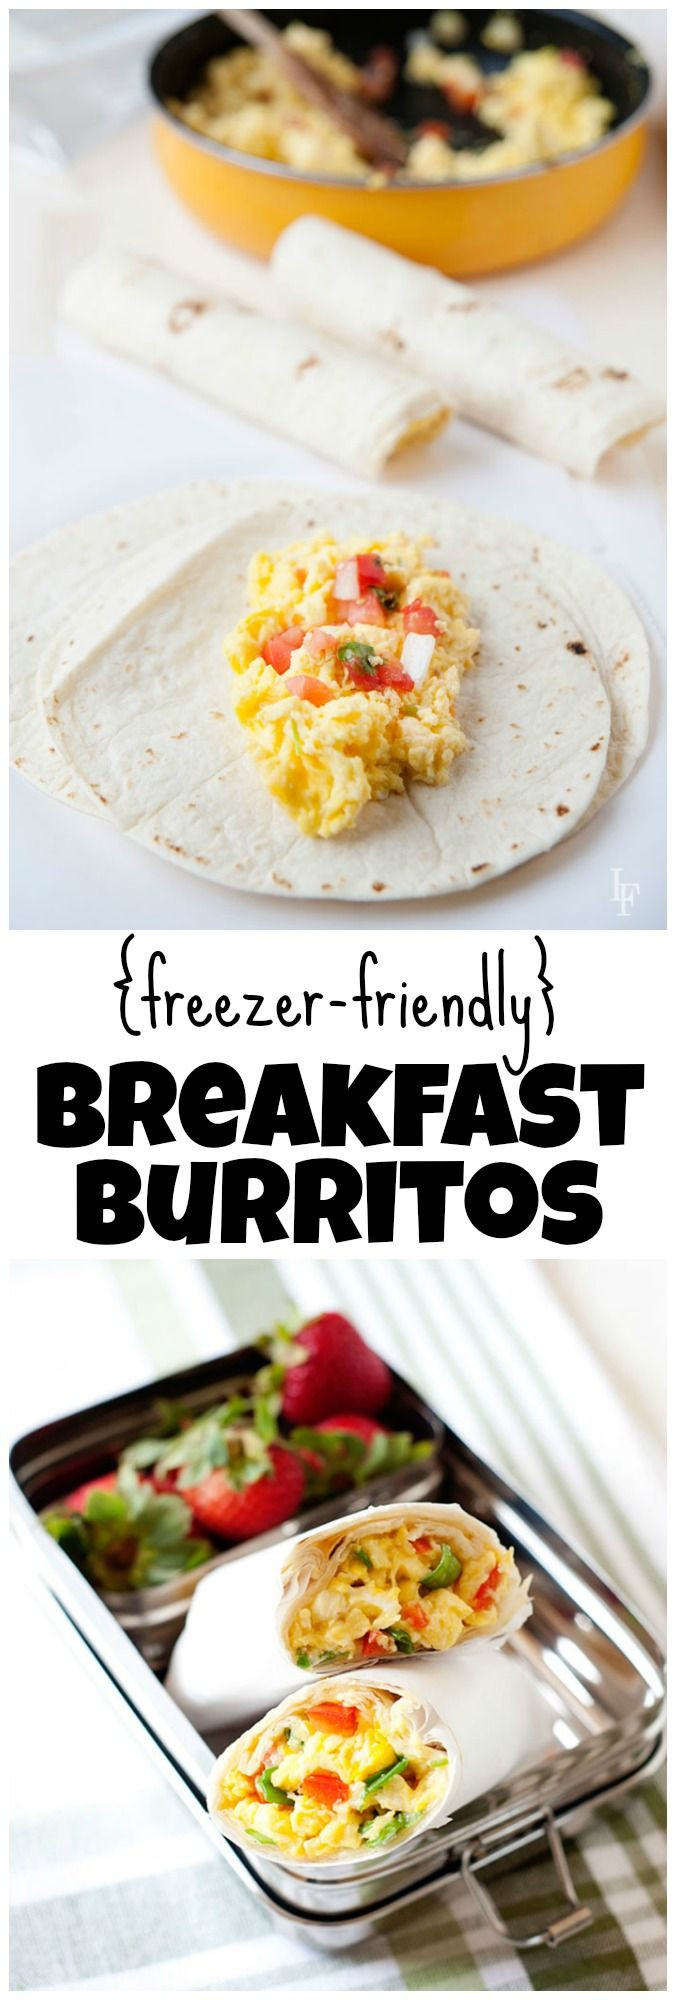 Make Ahead Breakfast Burrito Recipes
 Freezer Friendly Breakfast Burritos from LauraFuentes